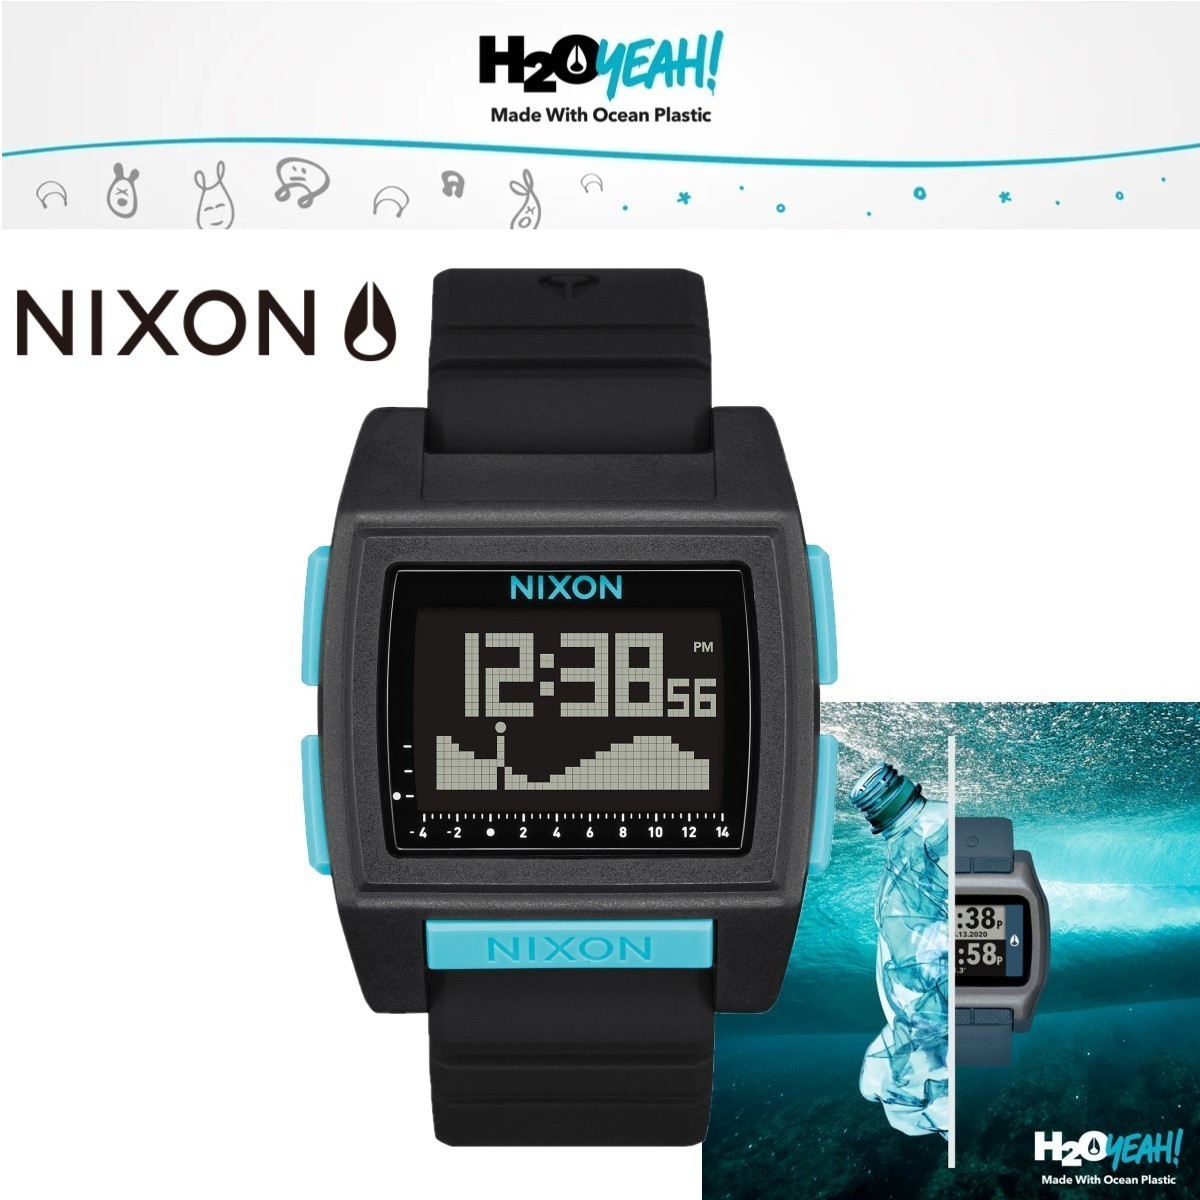  Nixon NIXON wristwatch free shipping beige baby's bib do Pro all black / blue A1307-602-00 marine sport 100M waterproof unisex 